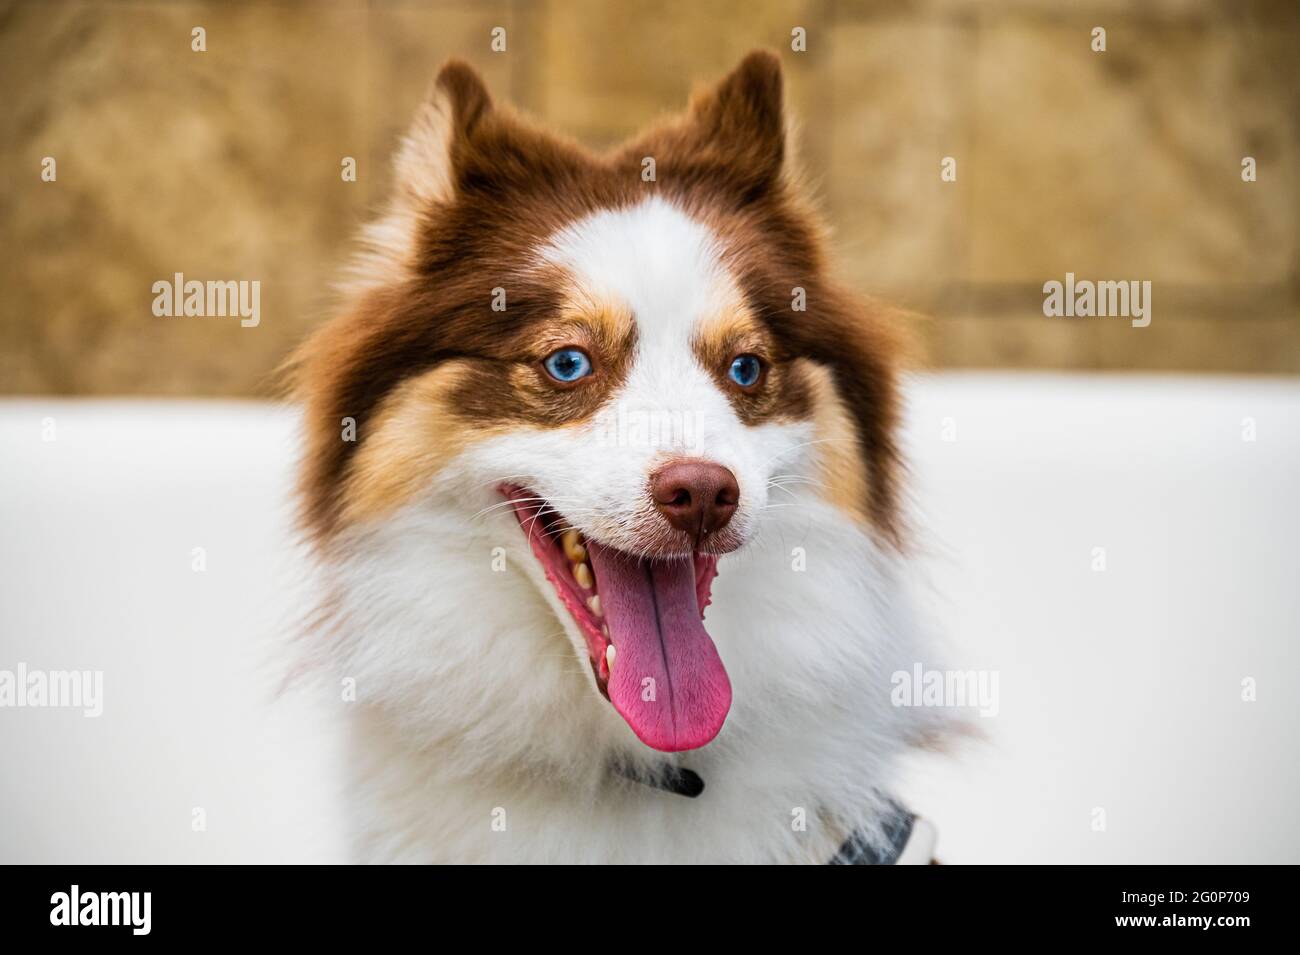 Beautiful Brown, Tan and White Pomeranian and Husky (Pomsky) mixed breed dog. Stock Photo